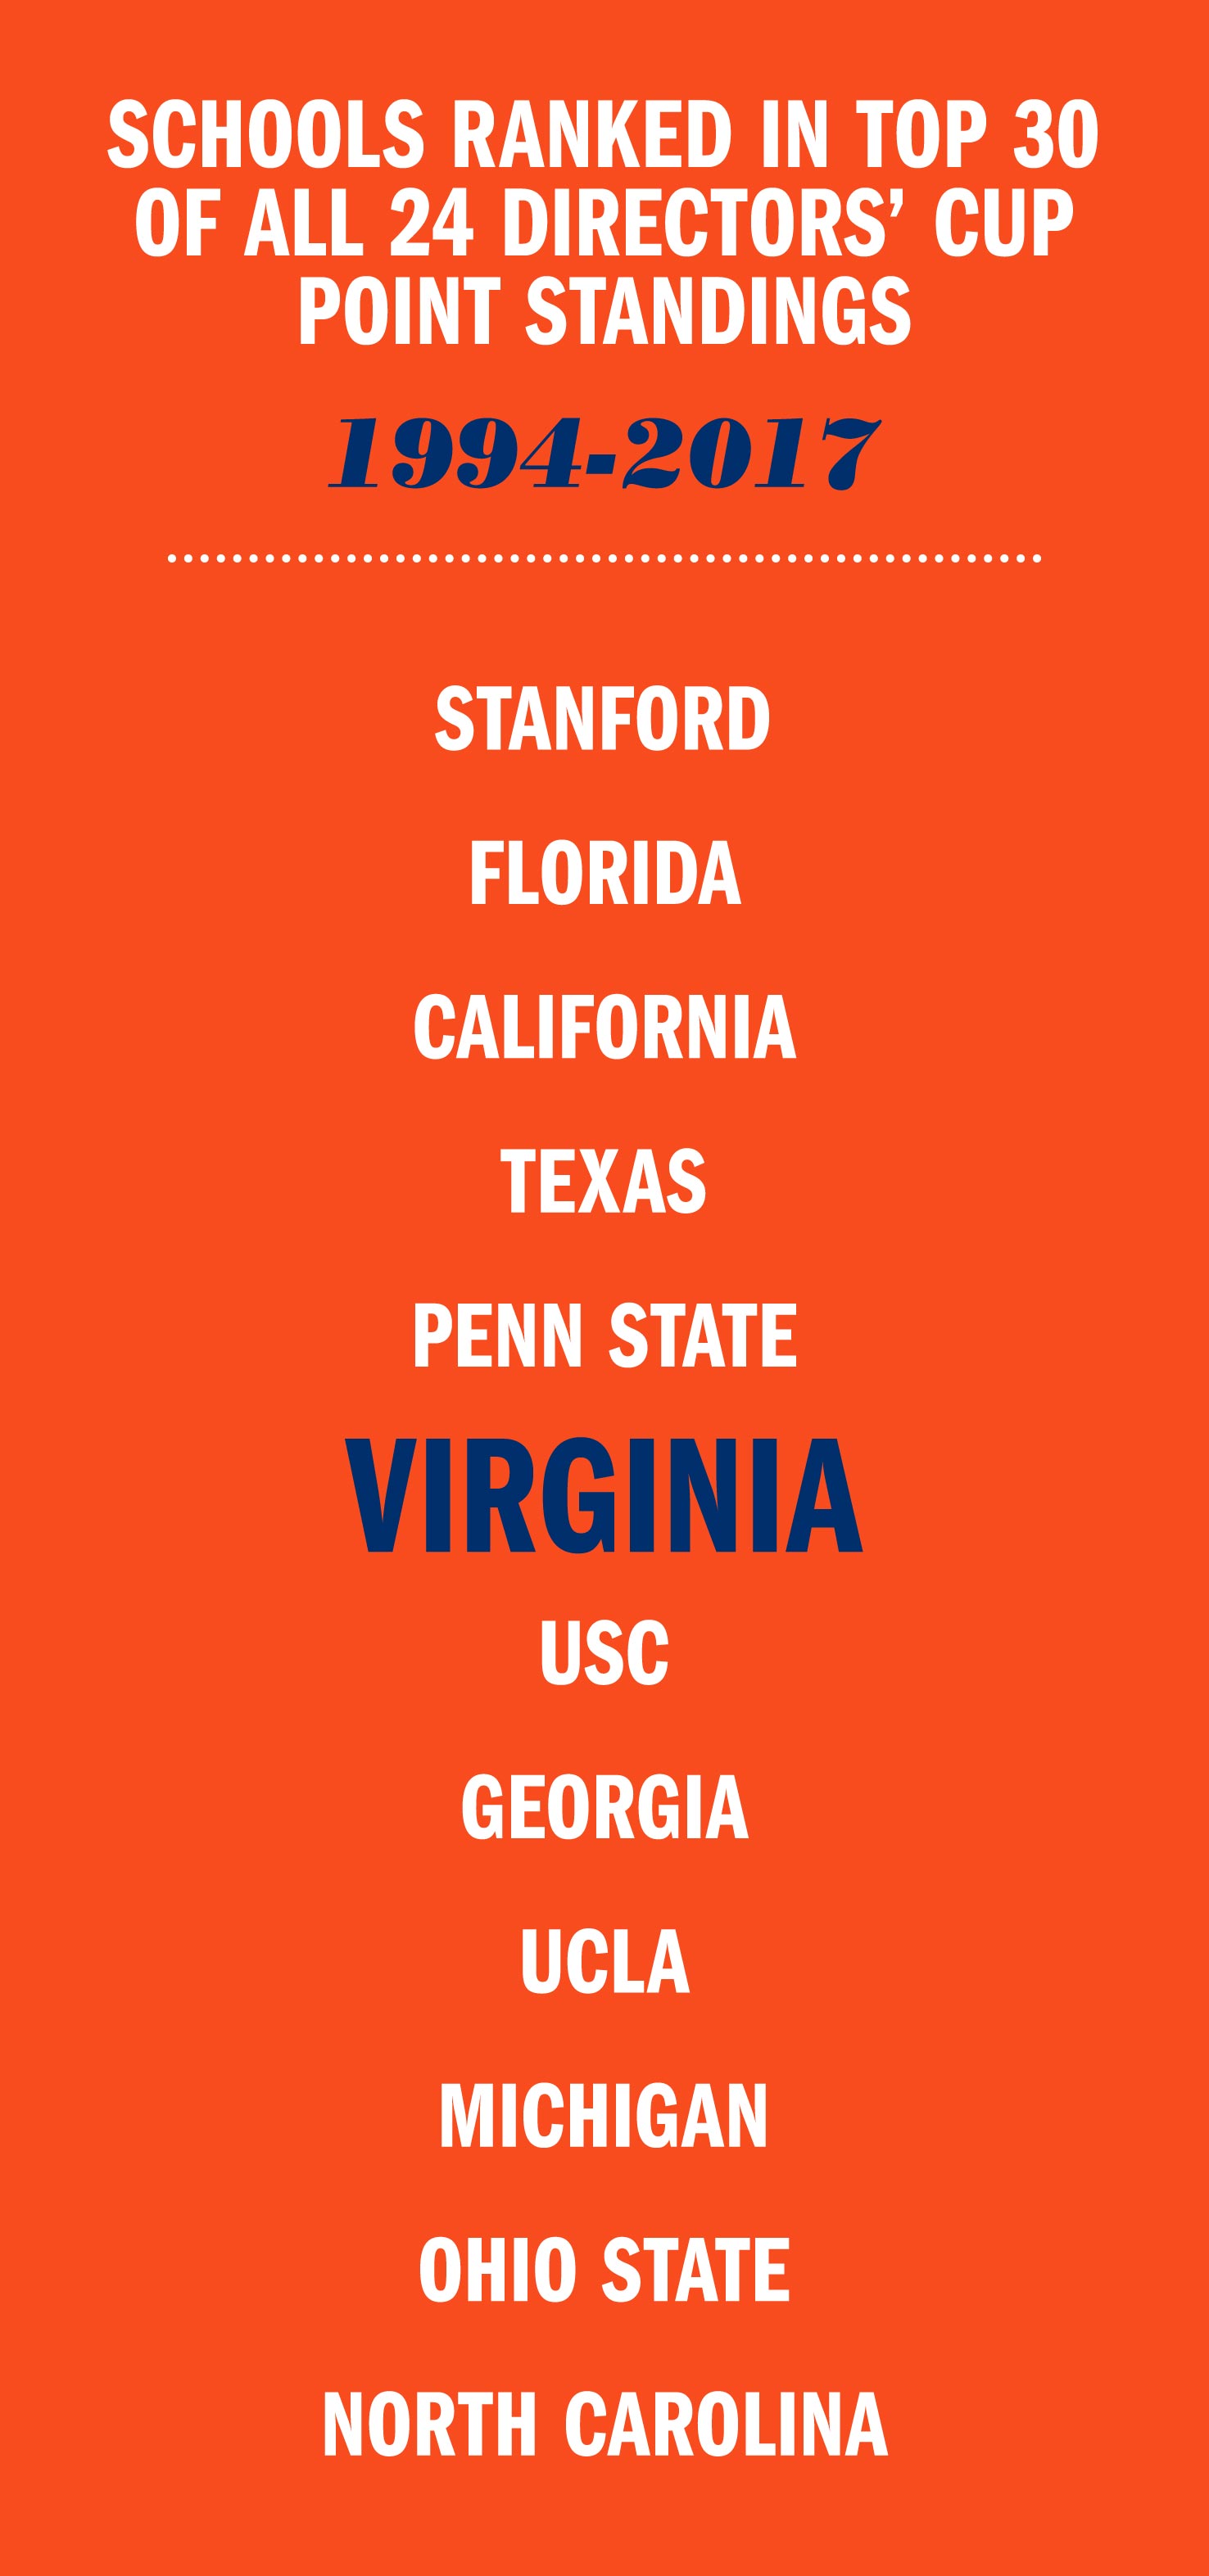 Text reads: Florida, California, Texas, Penn State, Virginia, USC